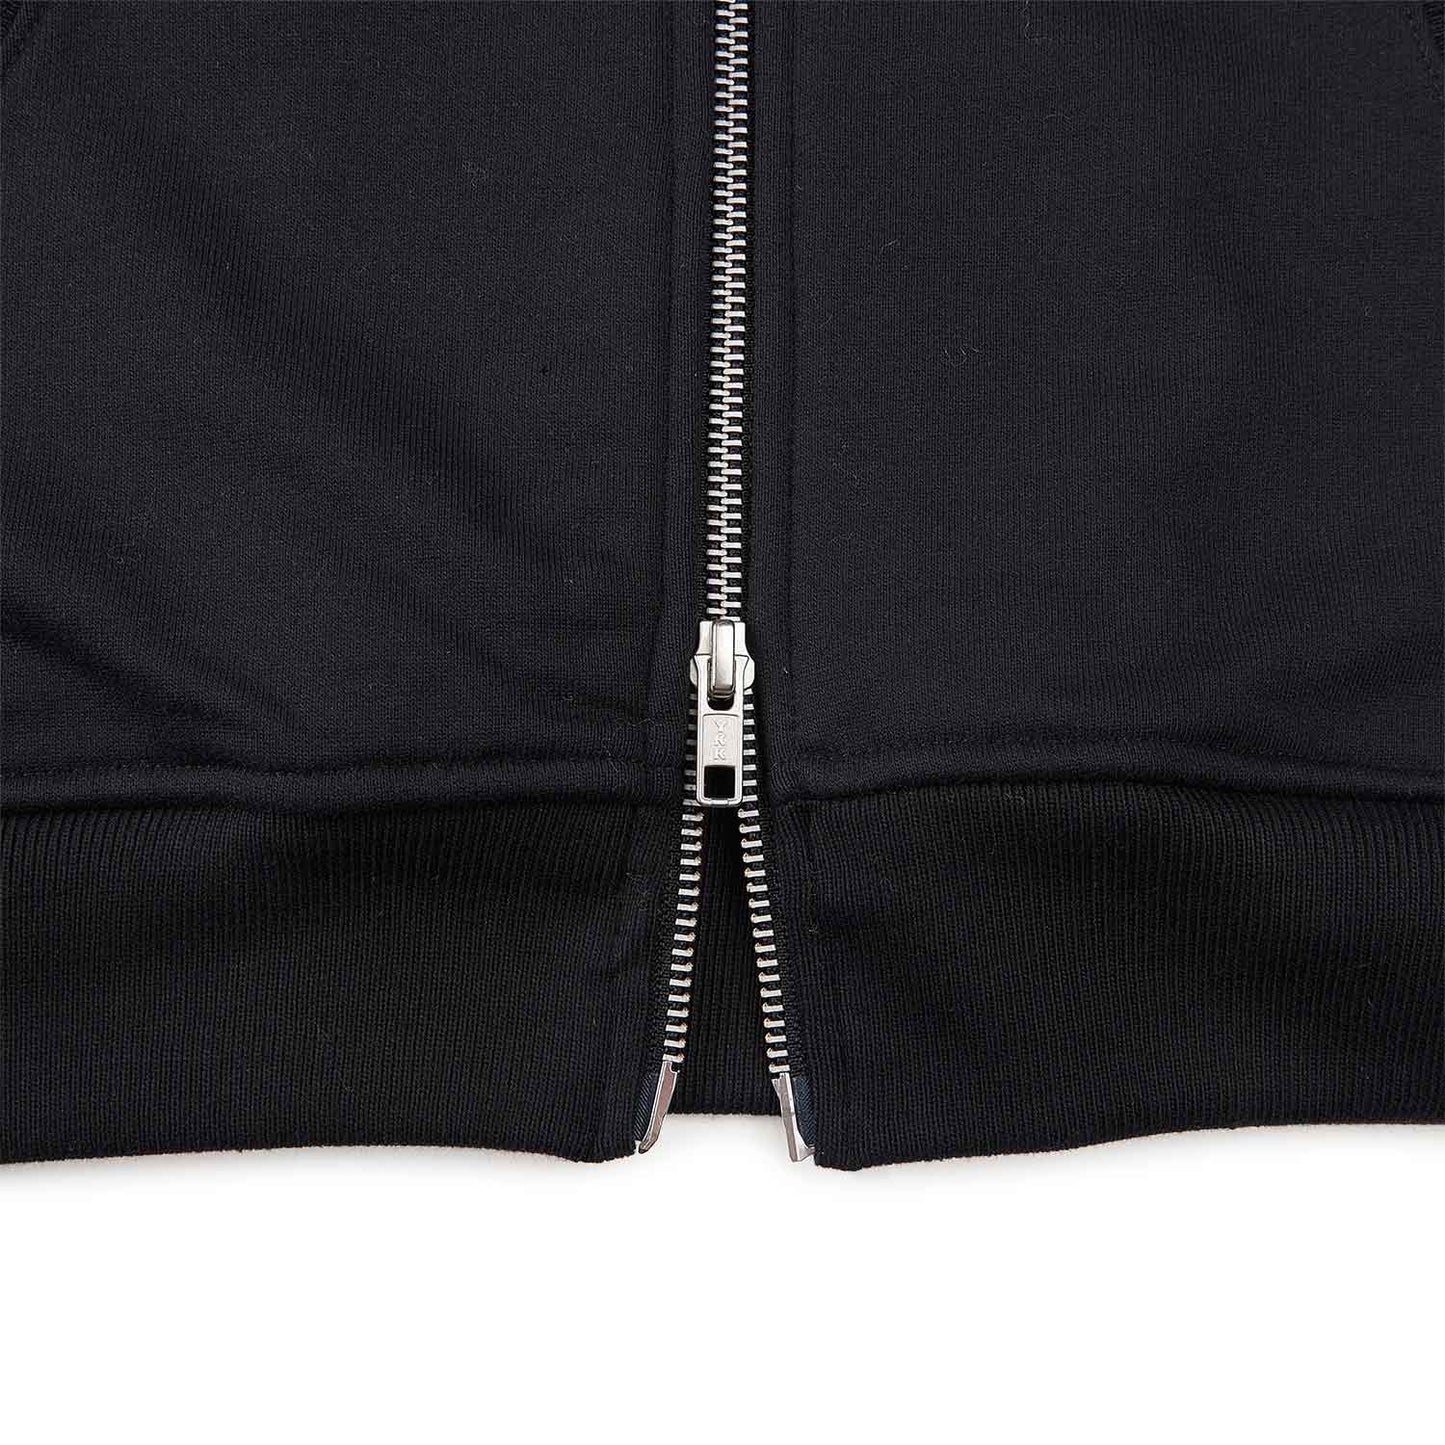 rassvet mini logo zip hoodie (schwarz)